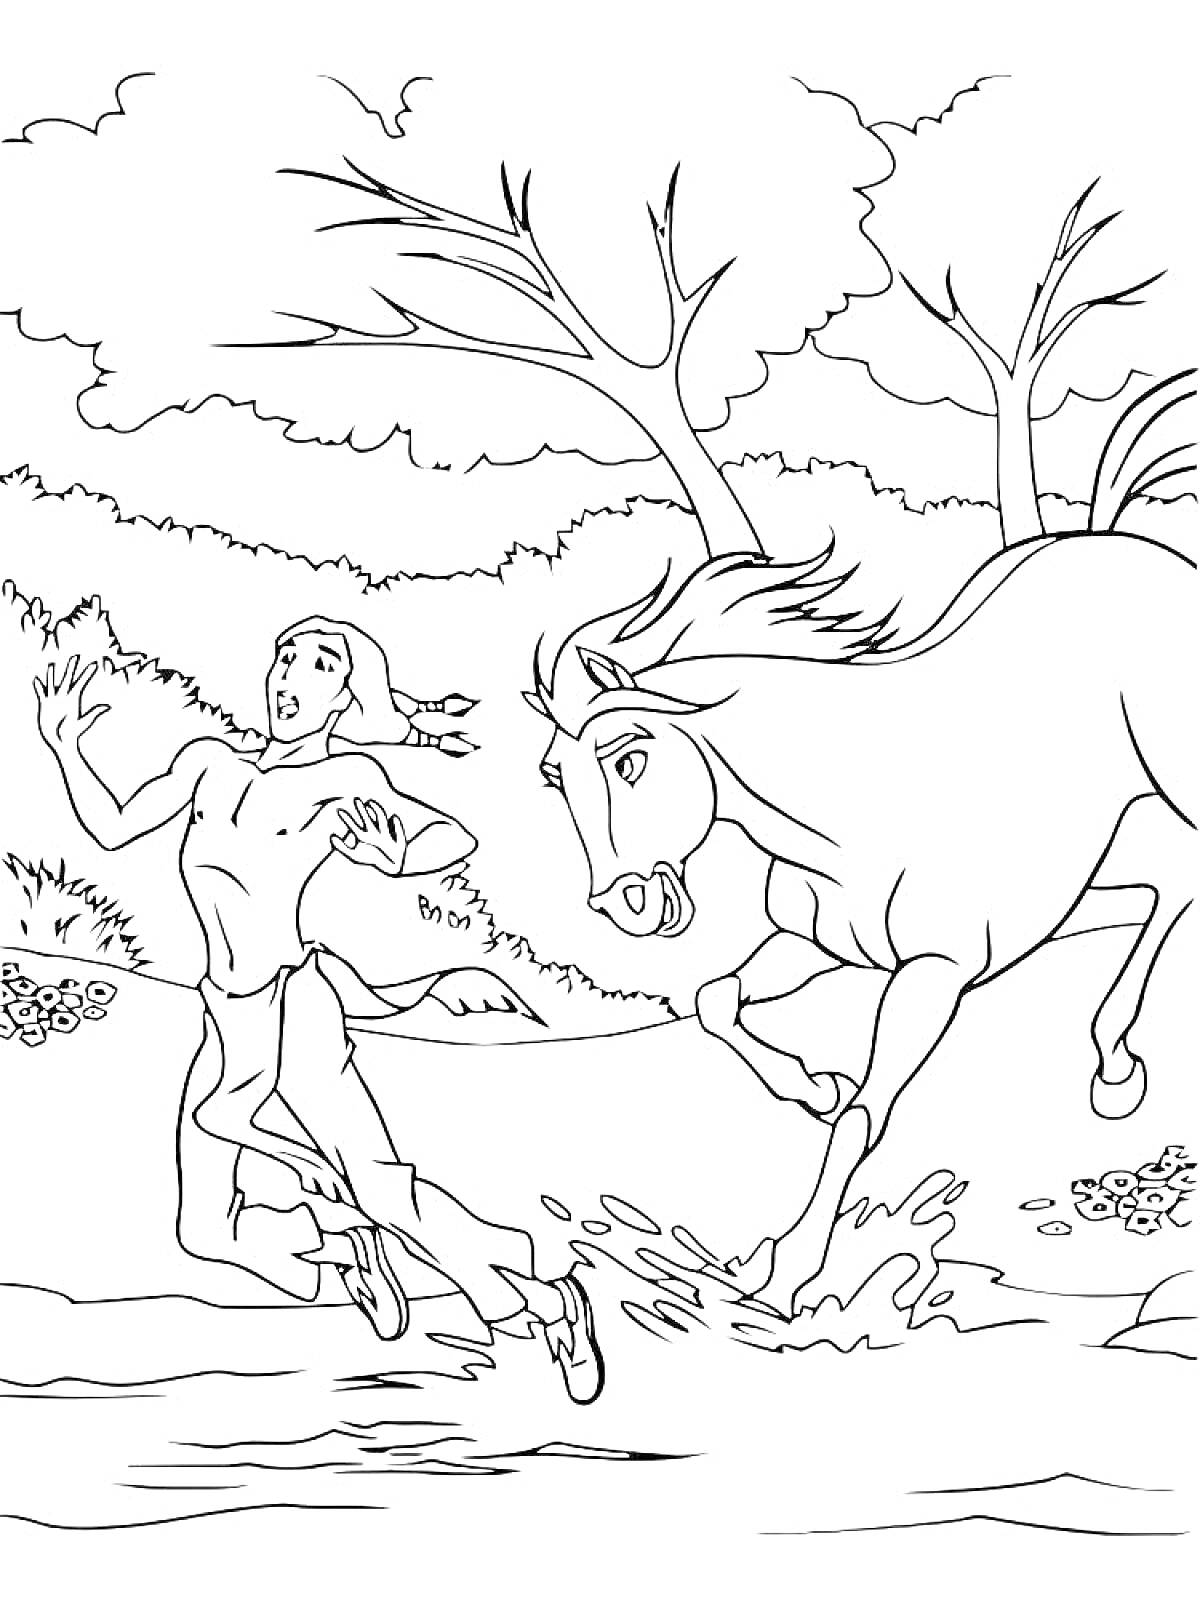 Раскраска Человек бегущий от лошади на берегу реки на фоне леса